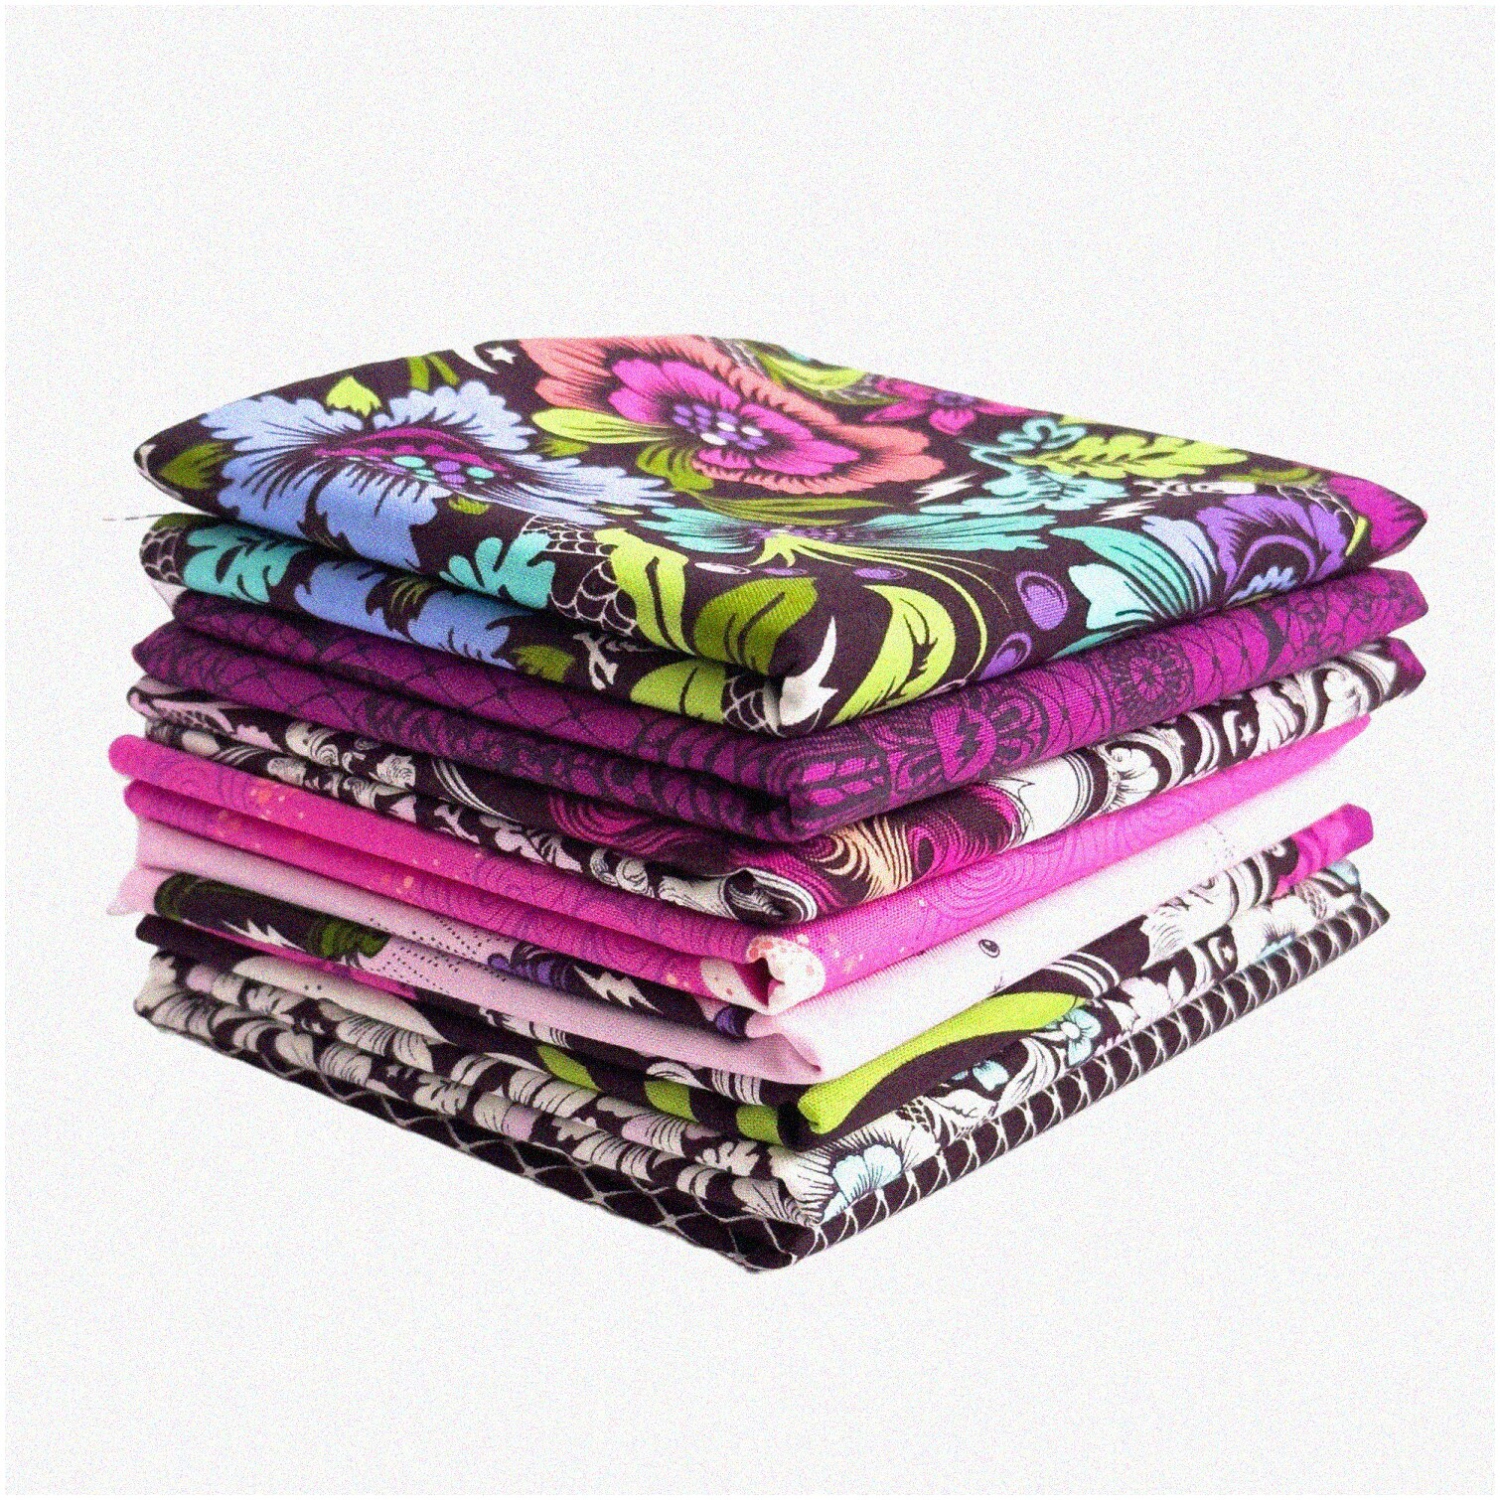 Enchanting Twilight Dreams Fabric Collection - Tula Pink's Nightshade Dj Vu FQ Bundle (8 Pieces) - 18x21 inches (45.72 cm x 53.34 cm) Cuts